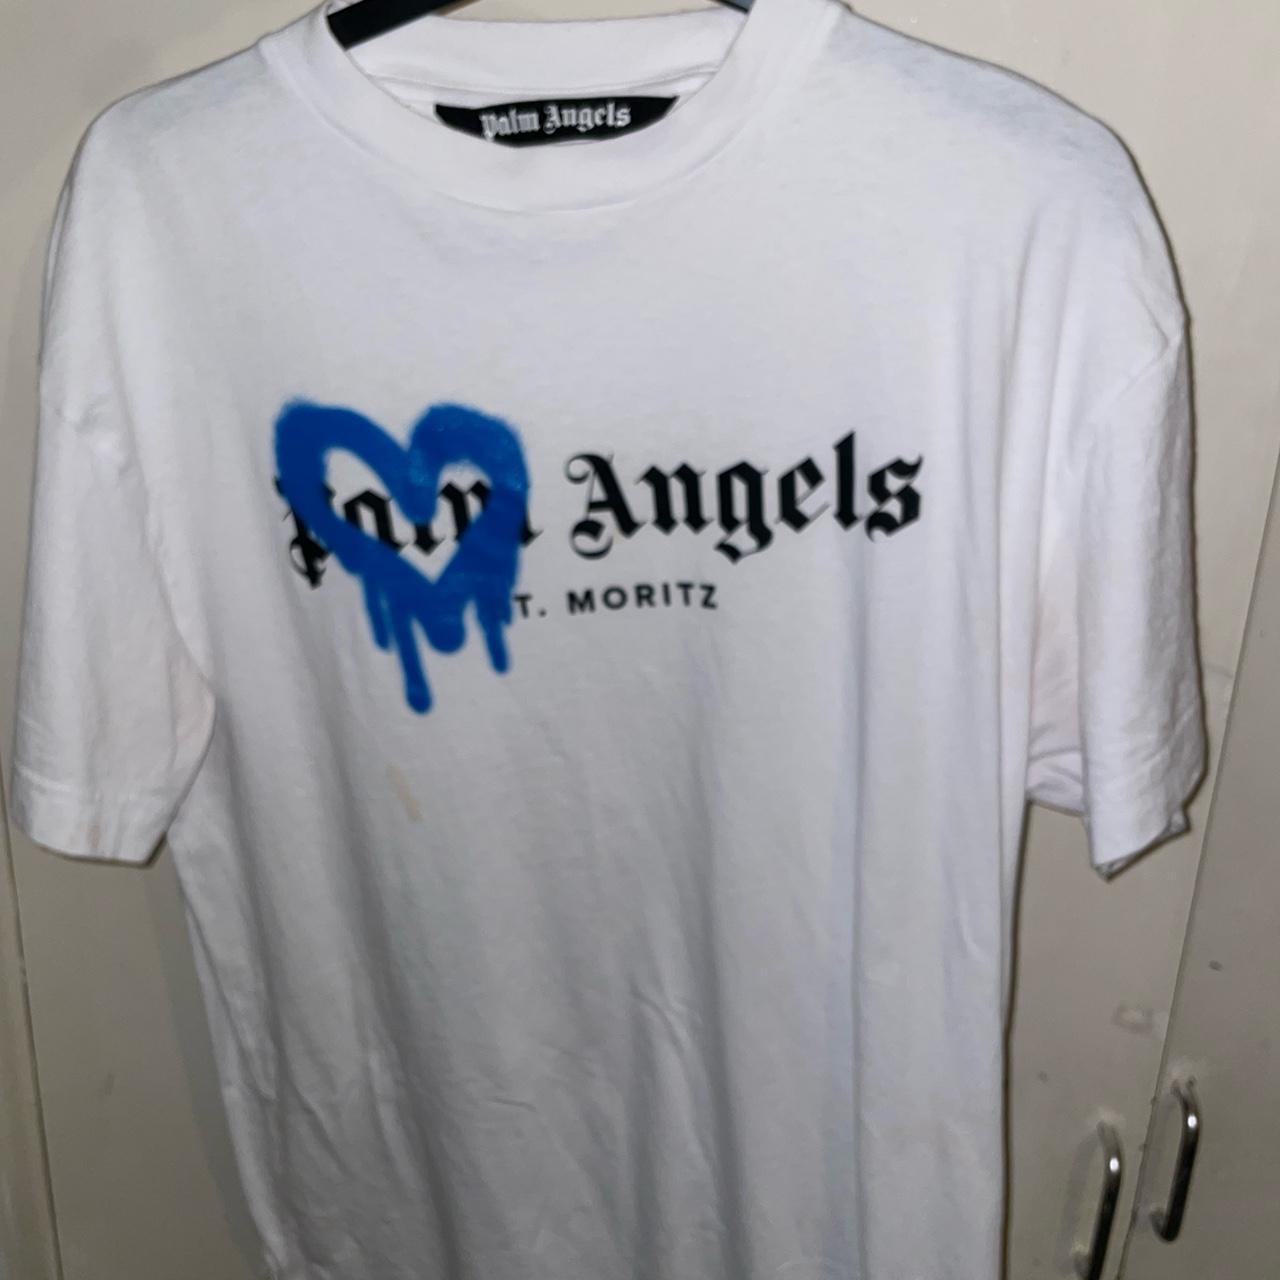 Palm angels mens t shirt - Depop